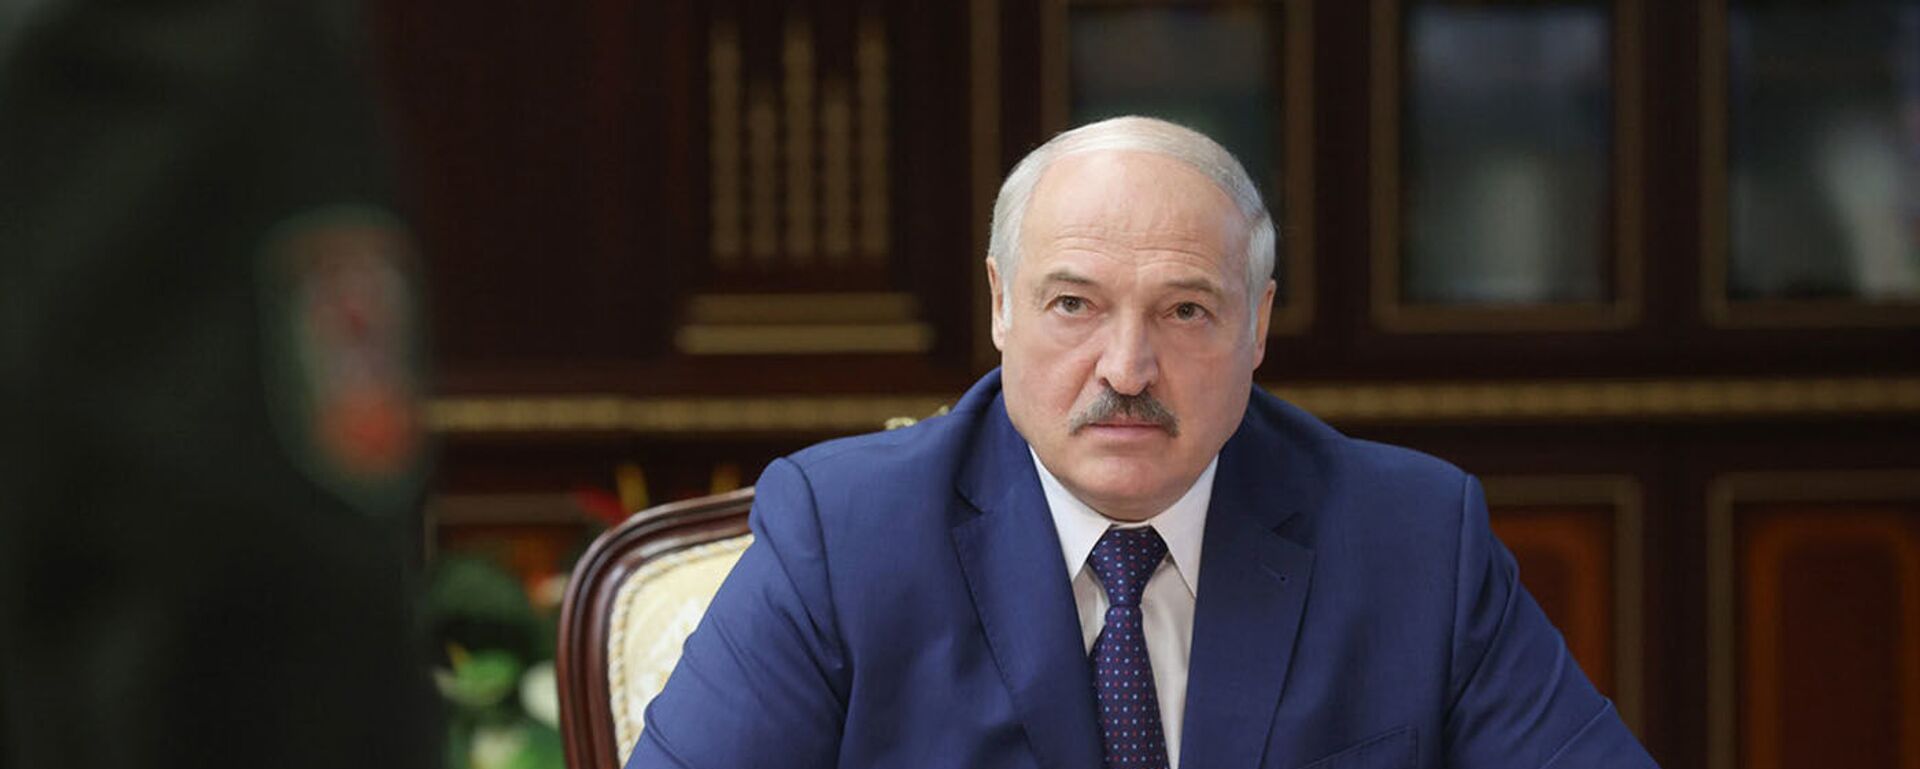 Tổng thống Belarus Alexander Lukashenko - Sputnik Việt Nam, 1920, 13.09.2021